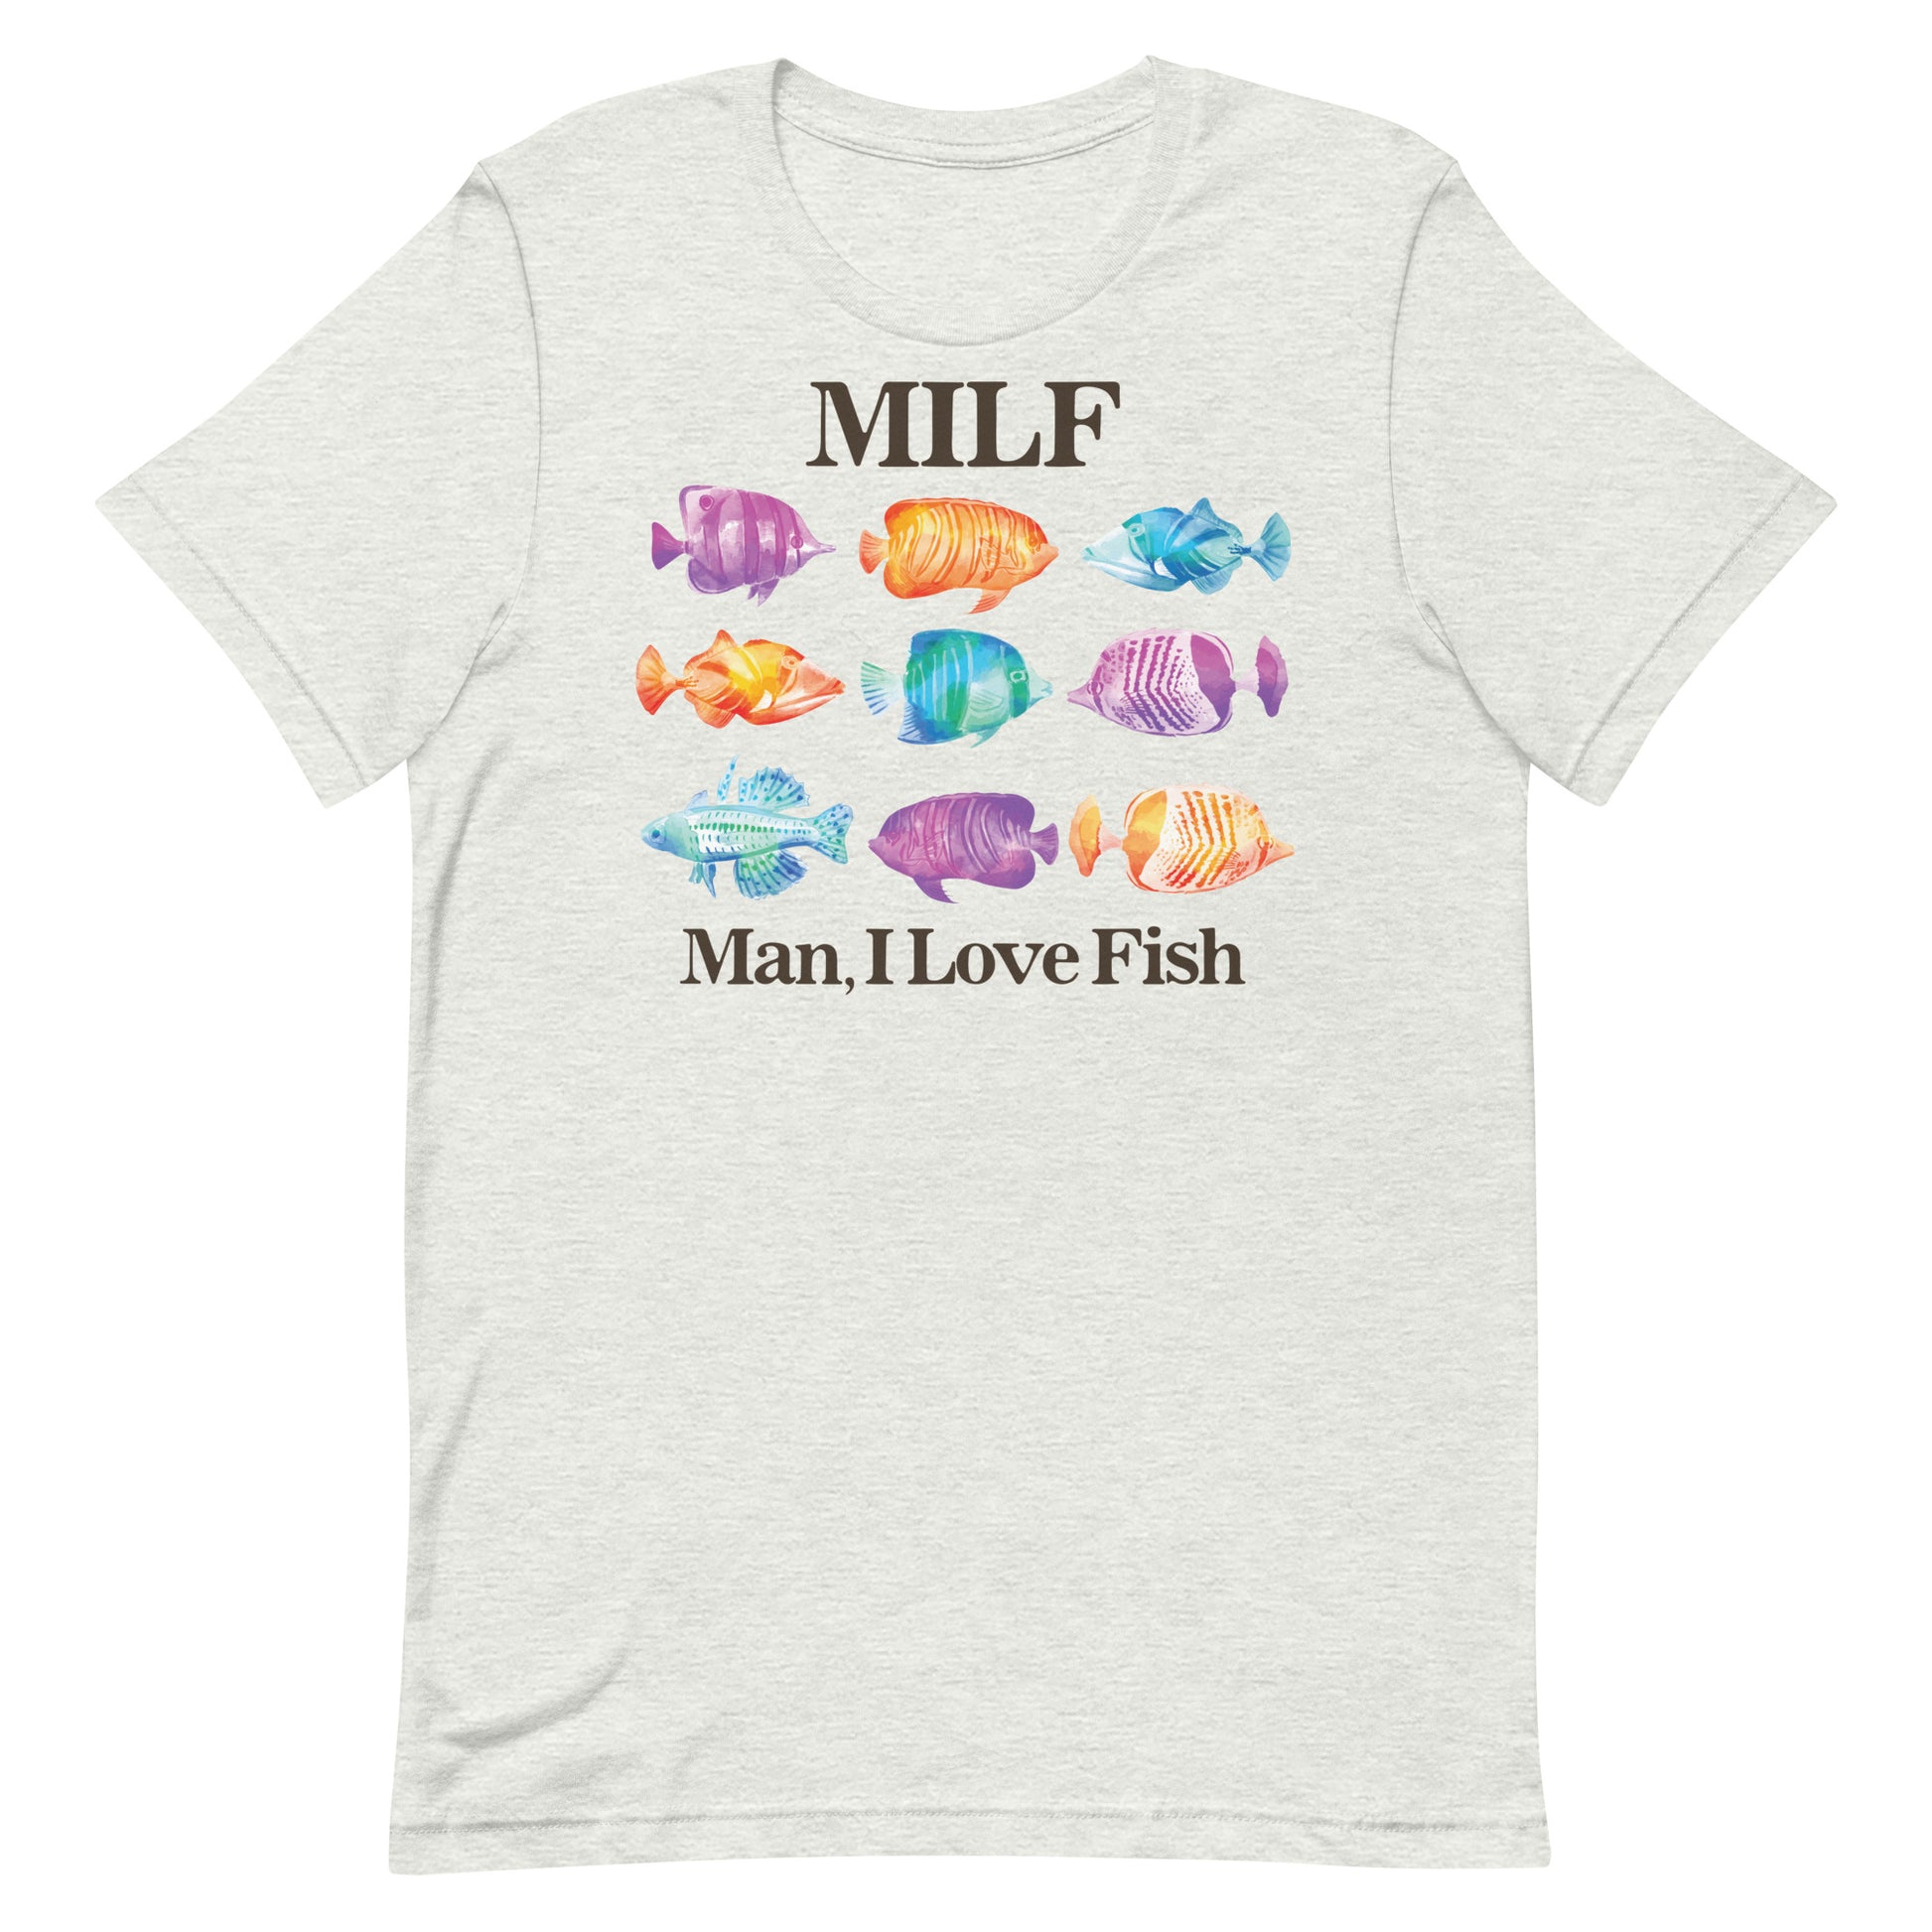 Man I Love Fishing - MILF – Southern Twisted Tees